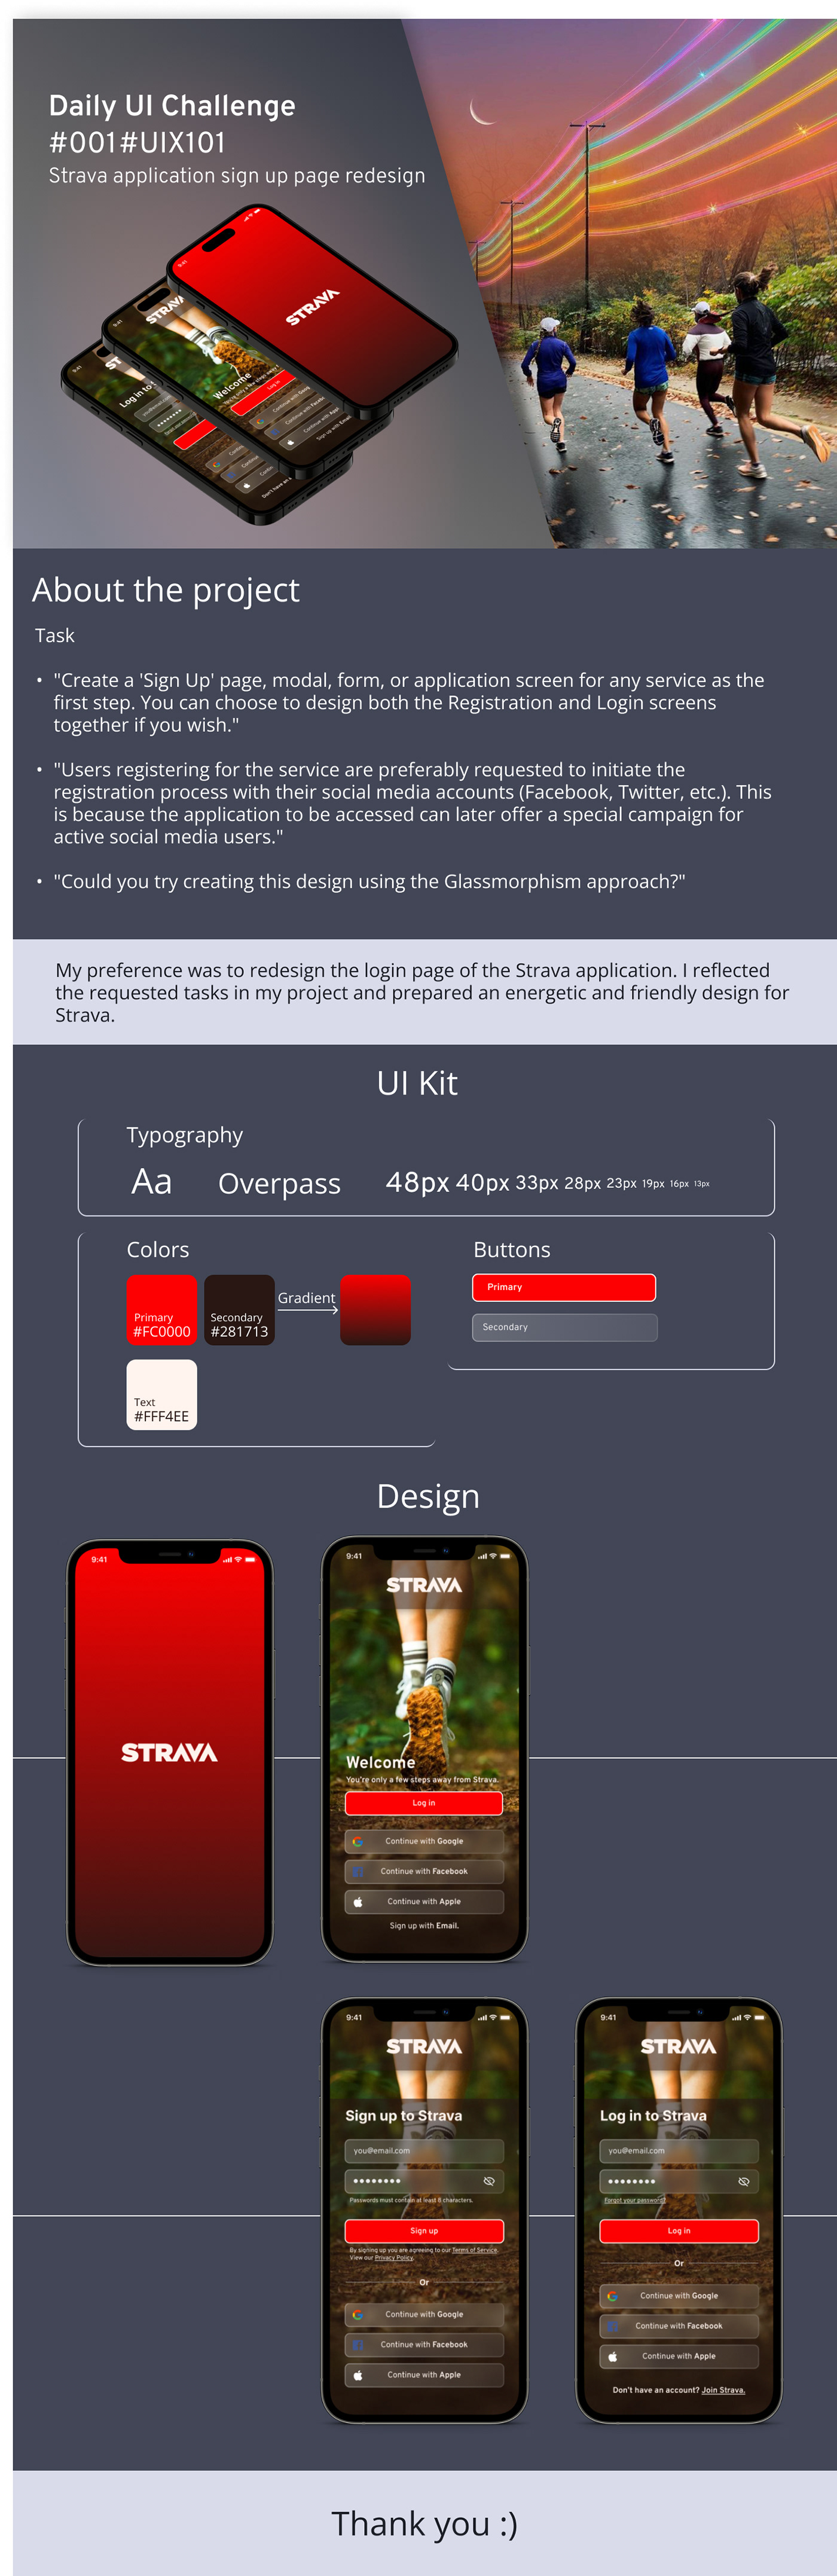 UIX DailyUI dailyuichallenge uix101 UI/UX Figma Mobile app redesign UI design